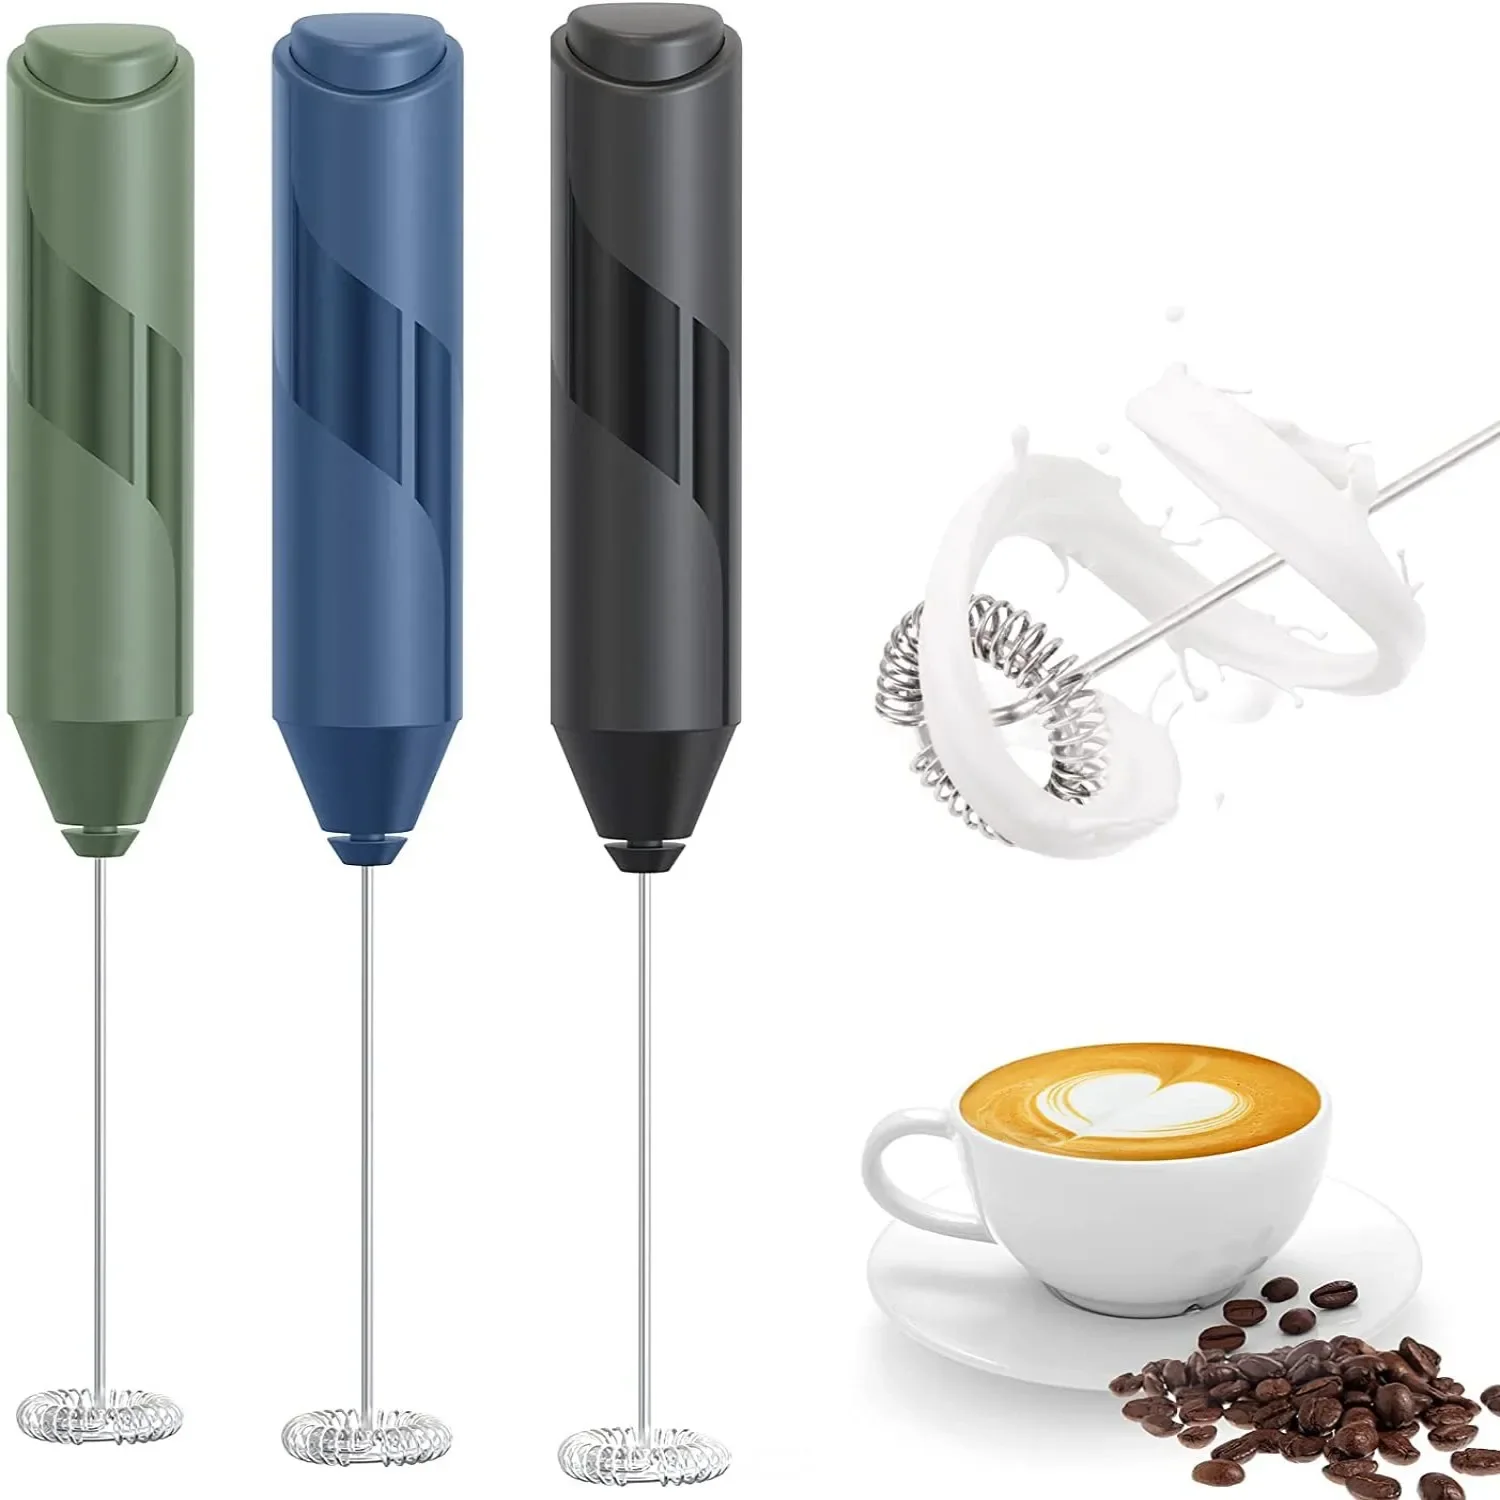 https://ae01.alicdn.com/kf/S21cdf816a8274506916b35288f9e863bm/Electric-Milk-Frother-Stick-Portable-Mini-Drink-Mixer-Coffee-Brush-Battery-Operated-for-Latte-Matcha-Tea.jpg